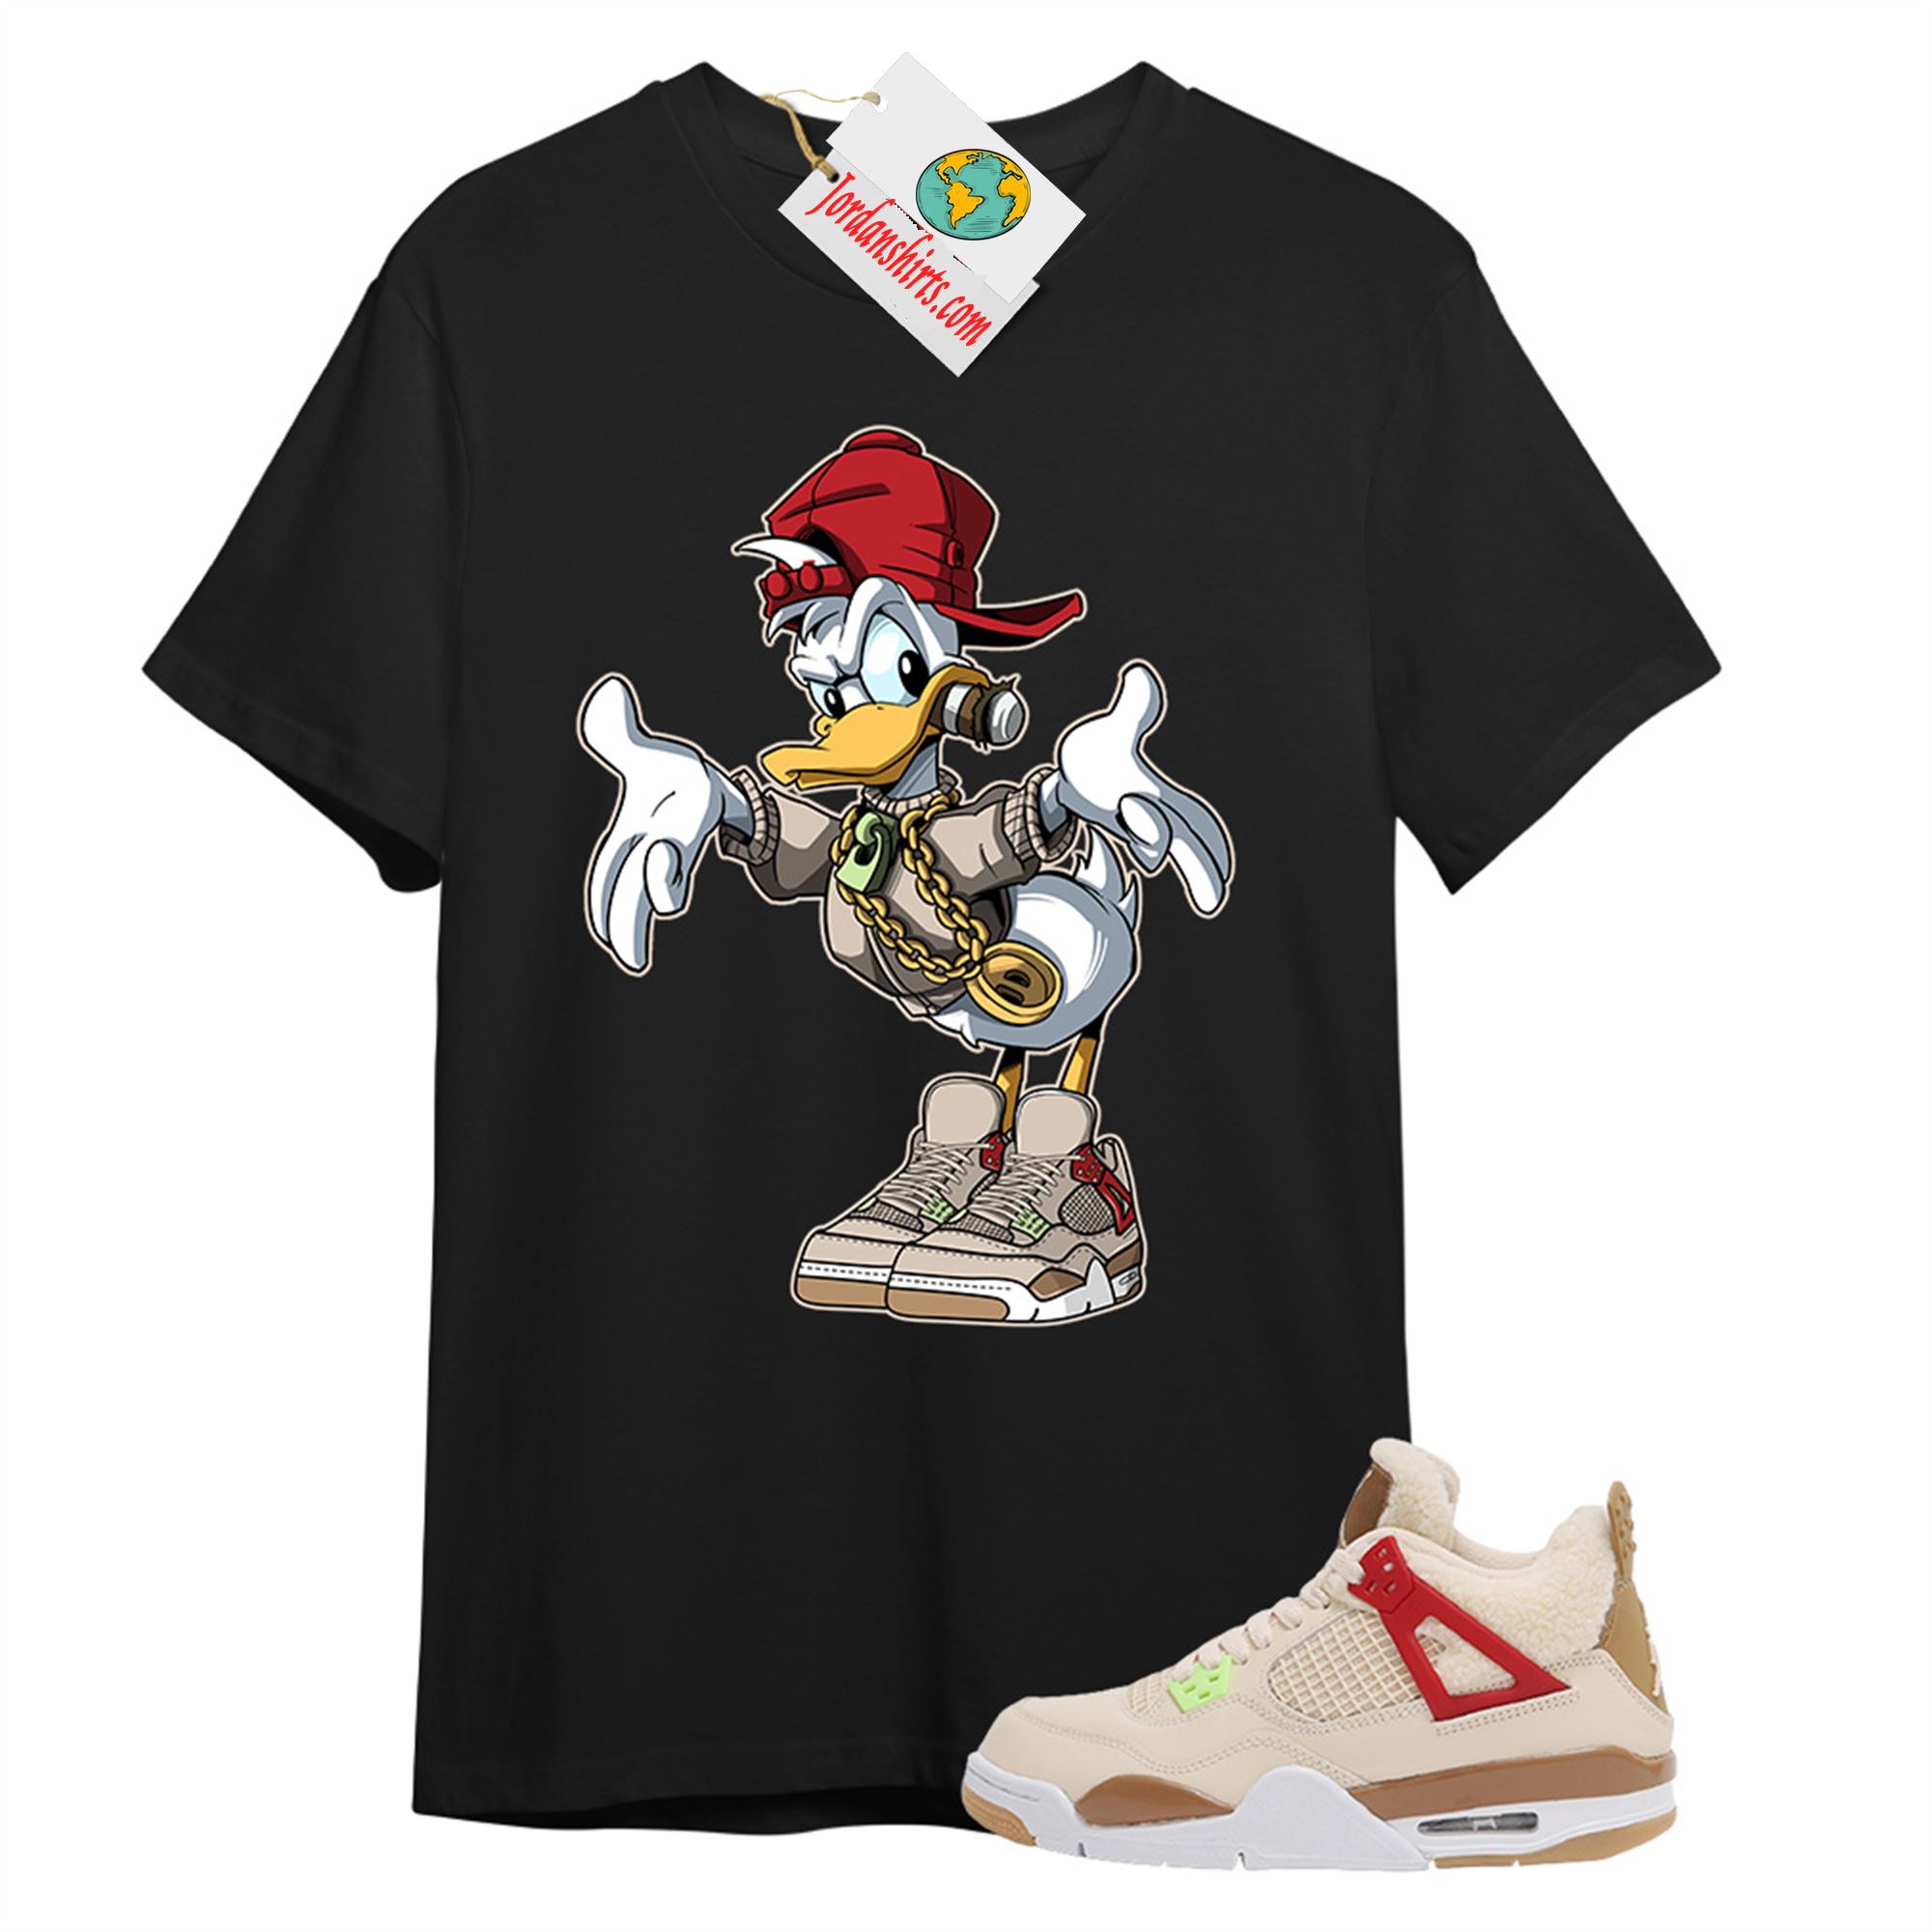 Jordan 4 Shirt, Donald Duck Black T-shirt Air Jordan 4 Wild Thing 4s Full Size Up To 5xl